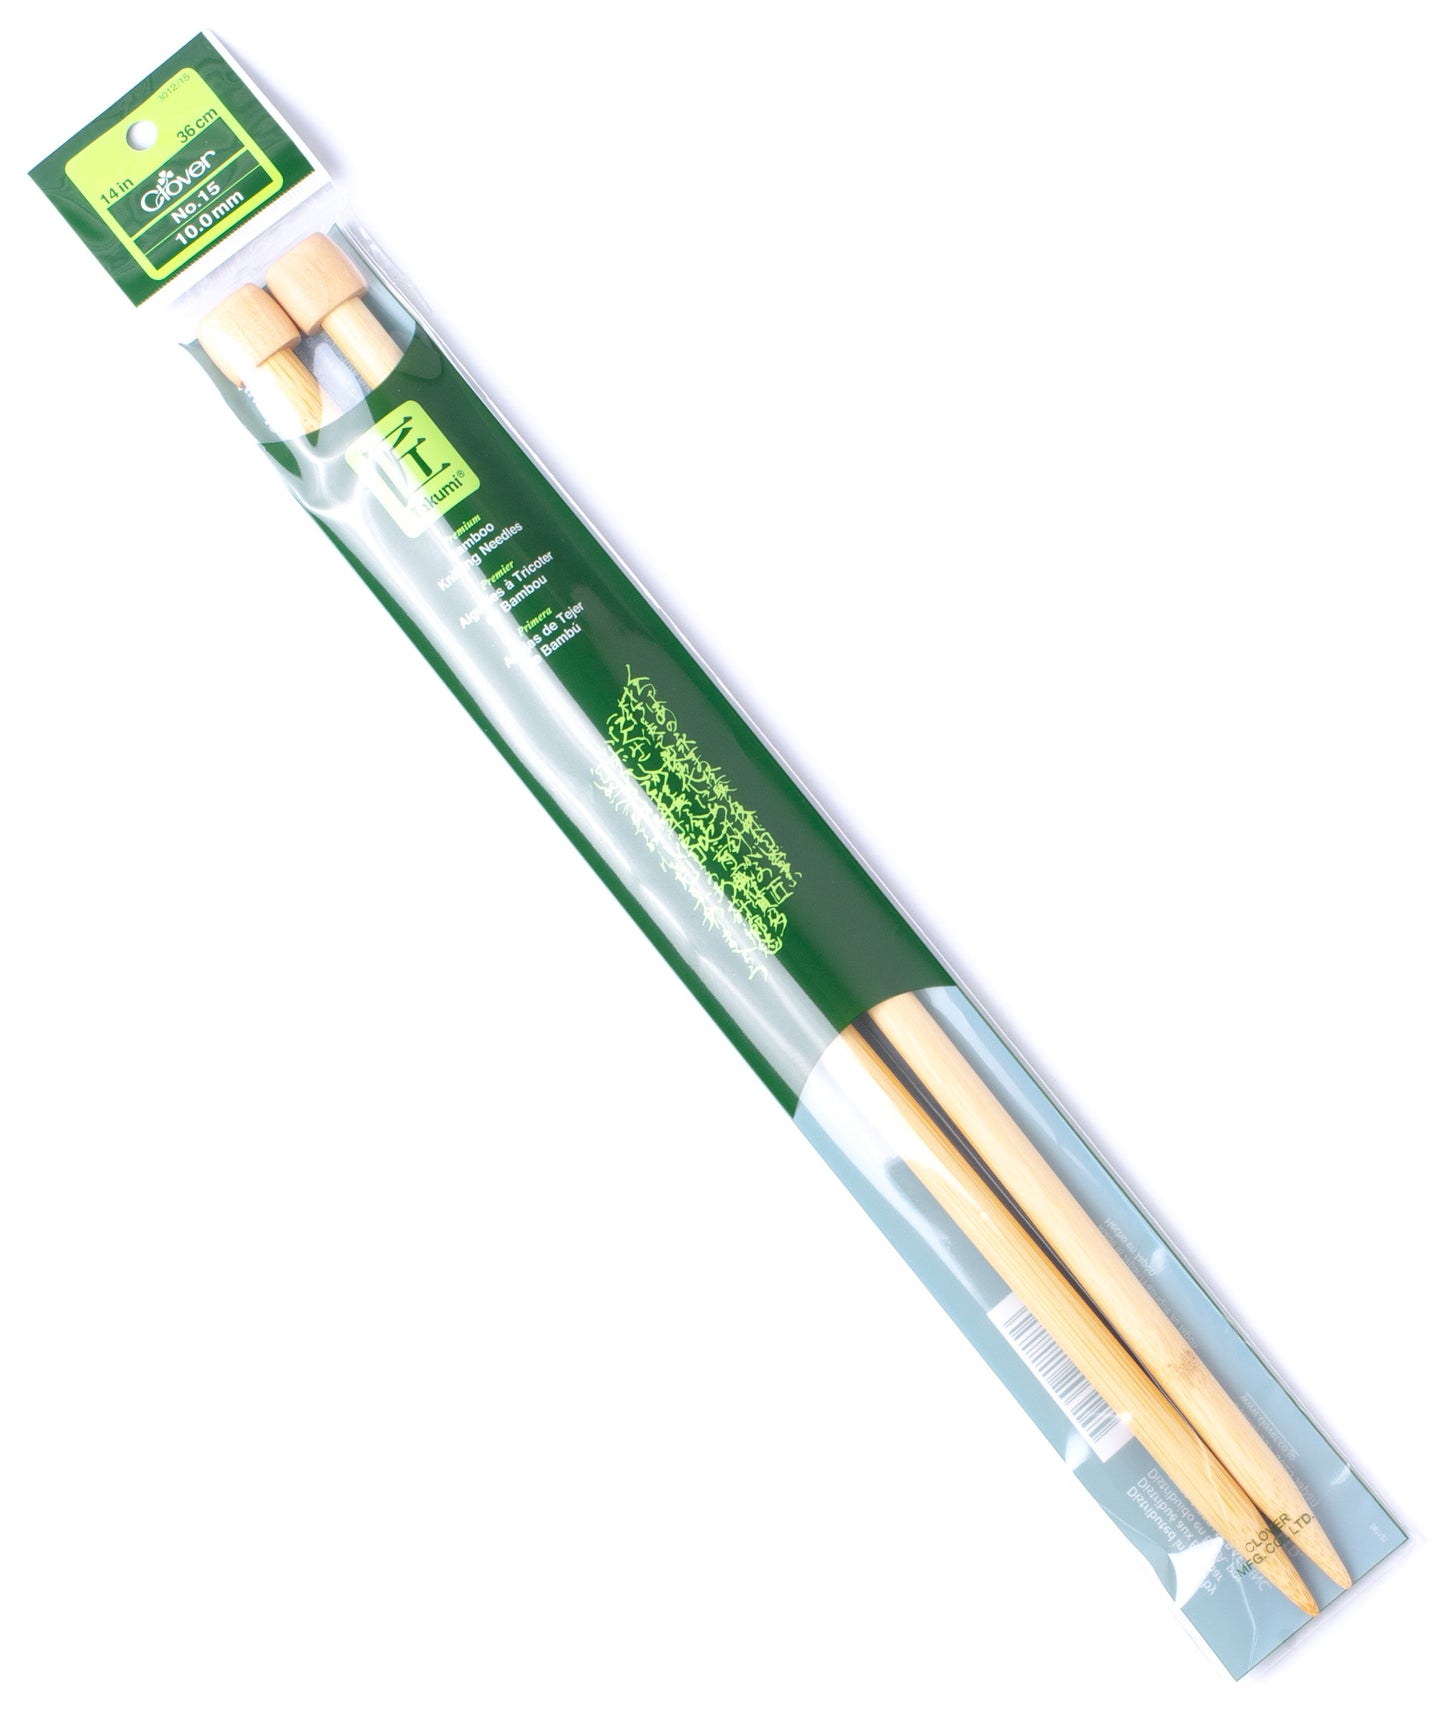 Clover Bamboo Single Point Needles - 13"